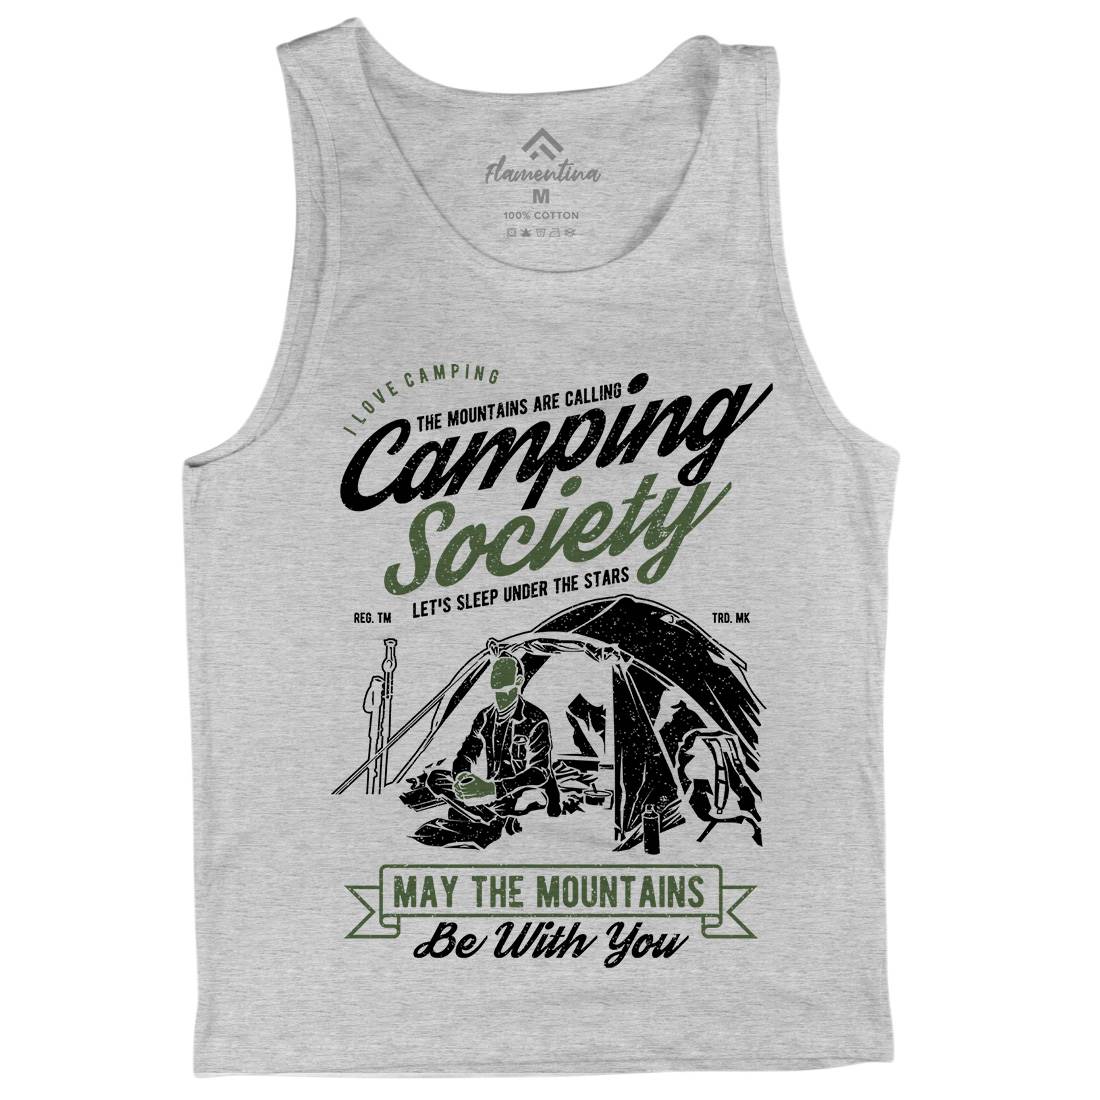 Camping Society Mens Tank Top Vest Nature A631